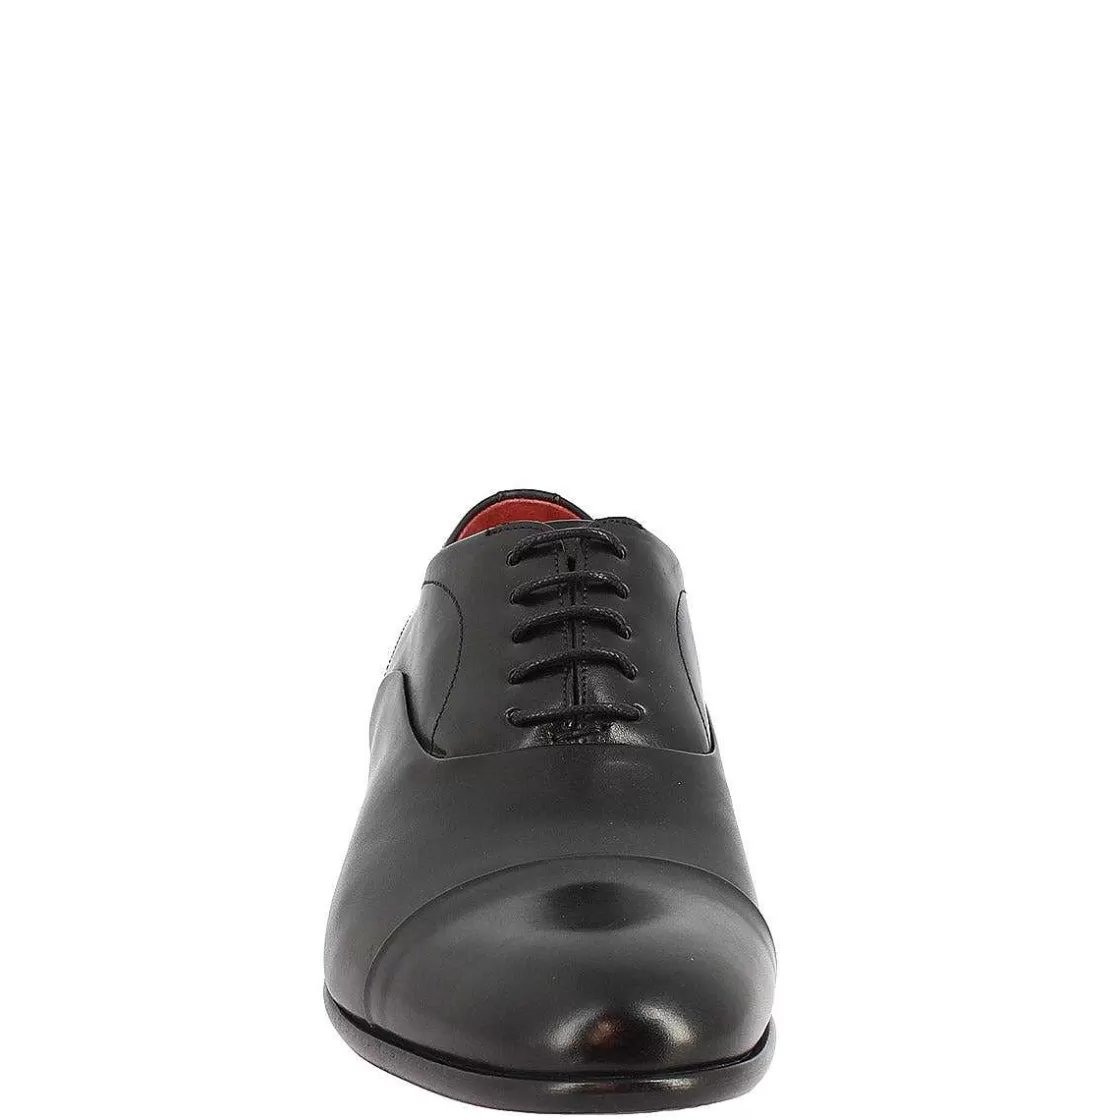 Leonardo Men'S Lace-Up Shoes Handmade In Black Leather Calfskin Fashion